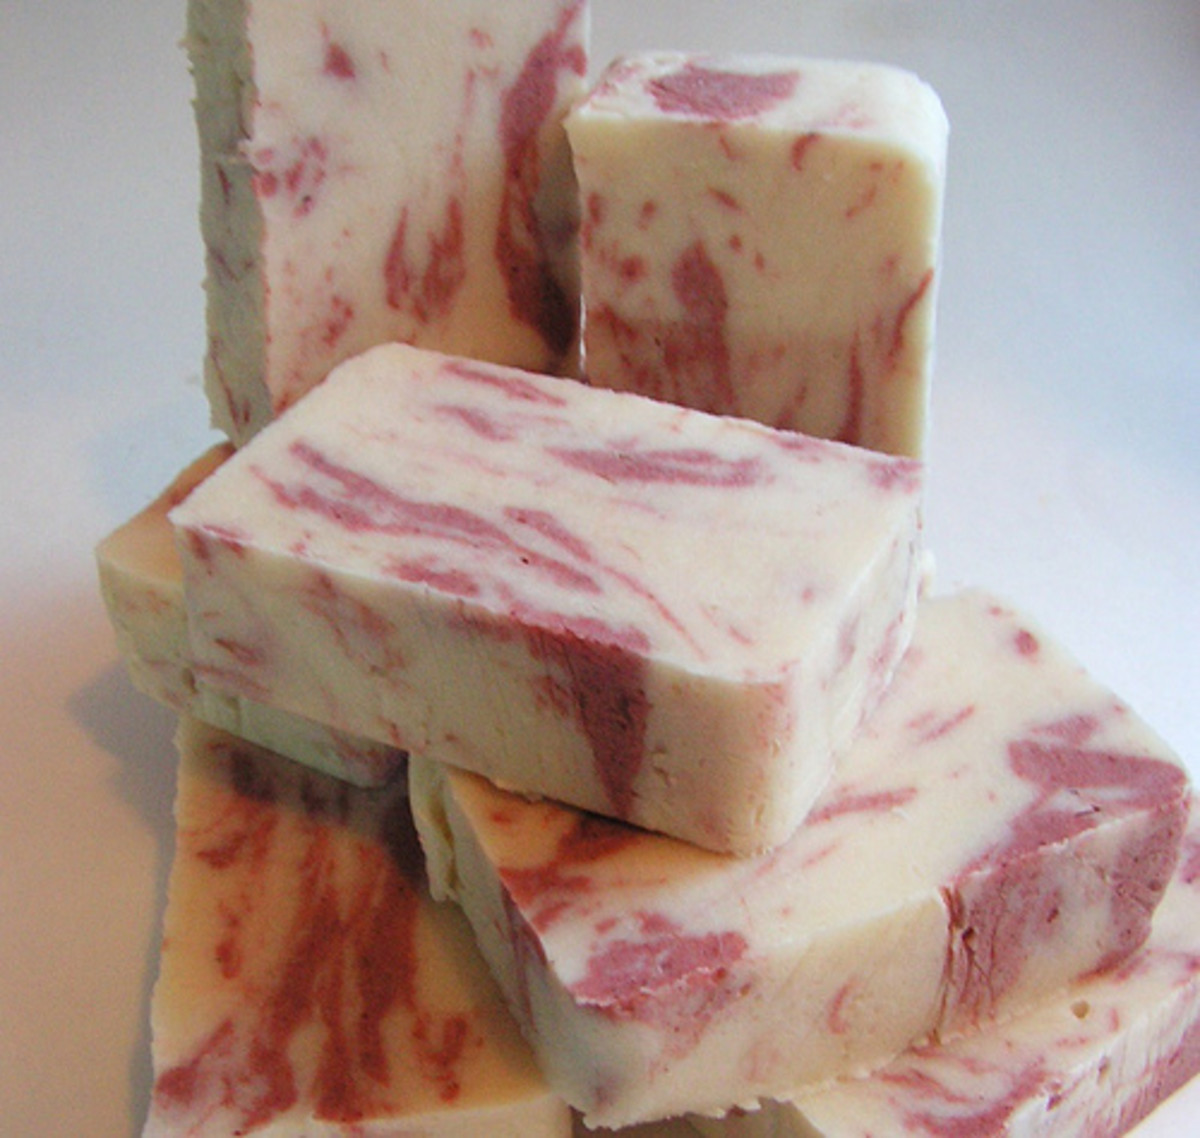 Peppermint essential oil makes a refreshing bath soap.